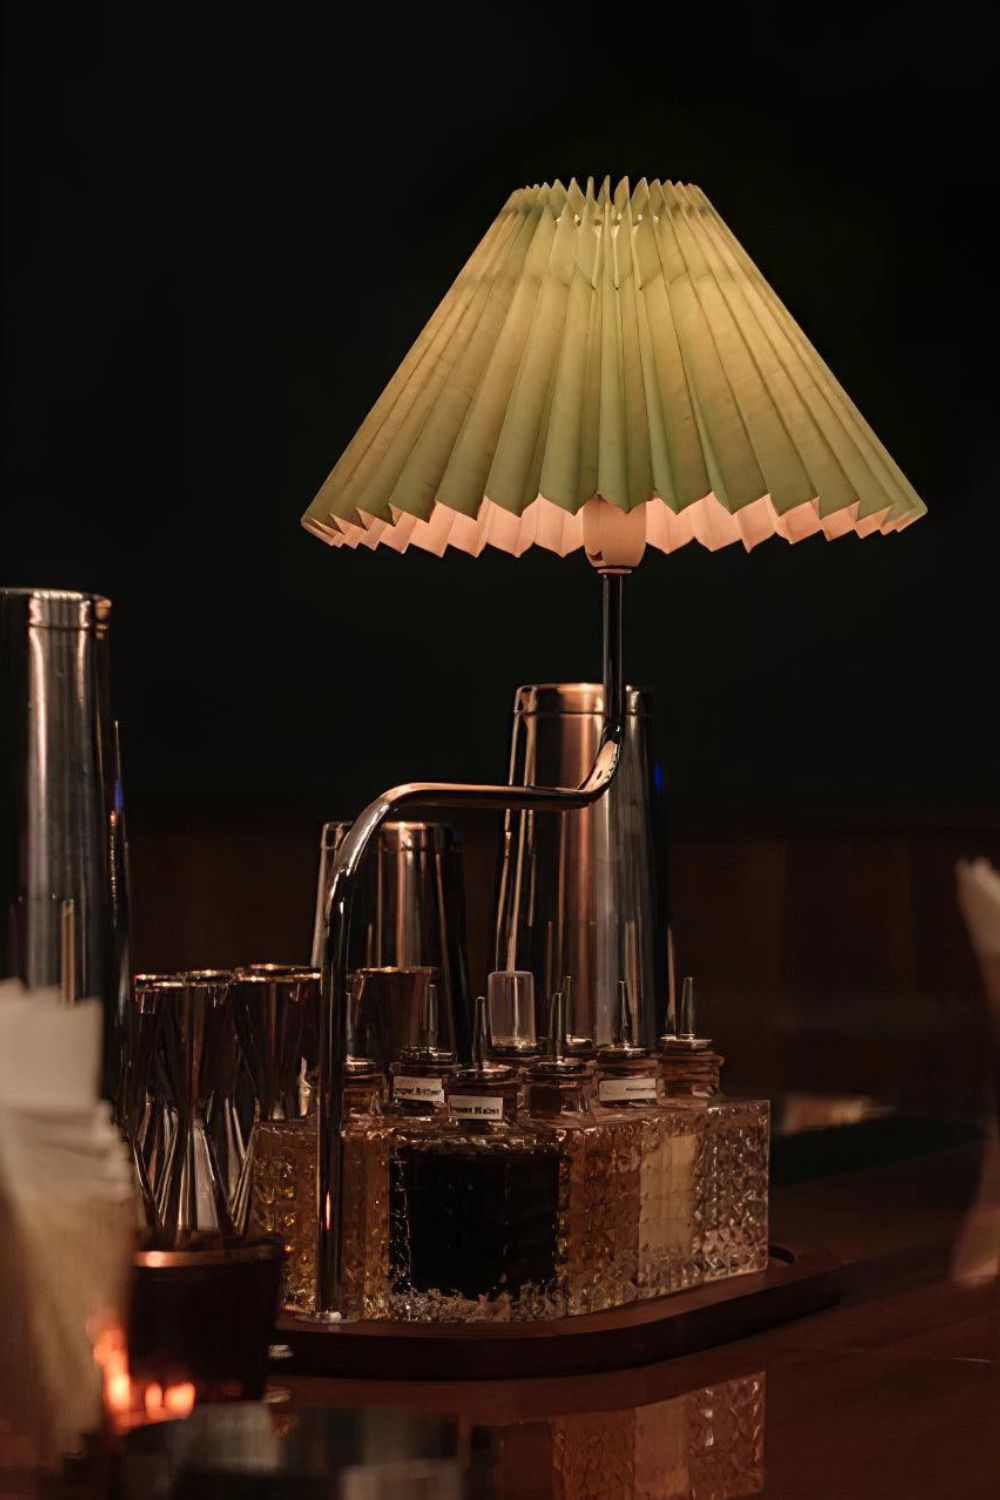 Eterna TL Table Lamp - SamuLighting